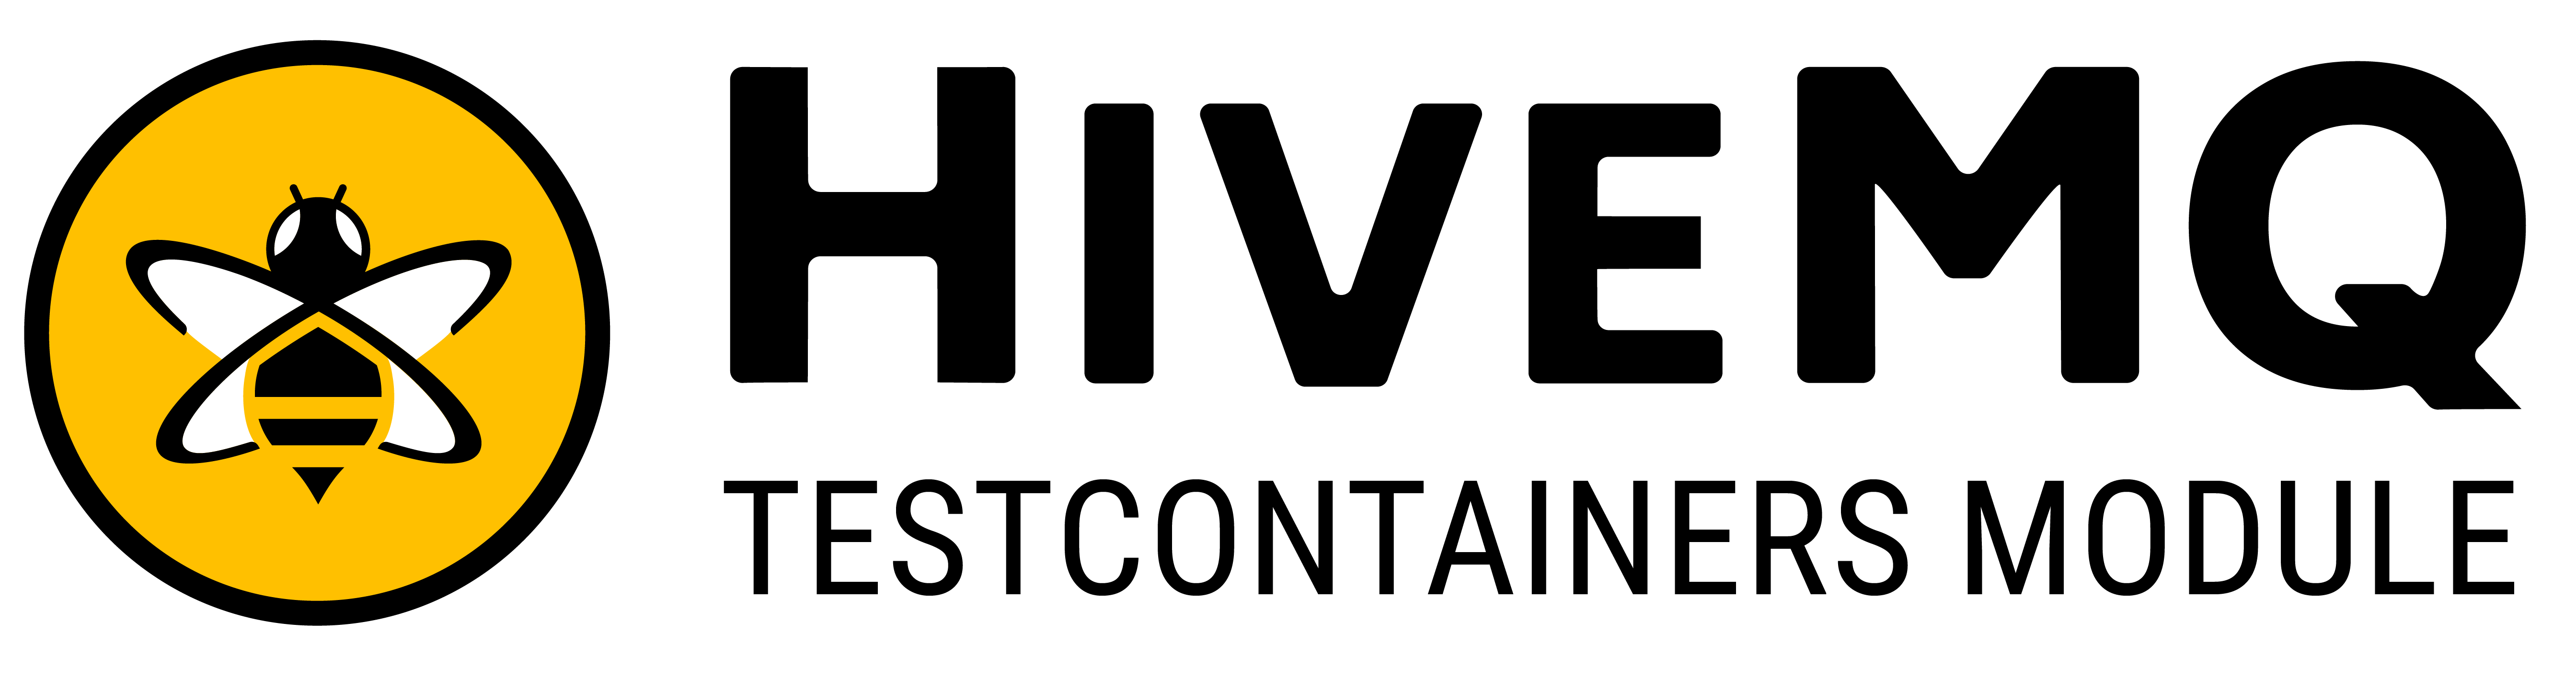 hivemq logo